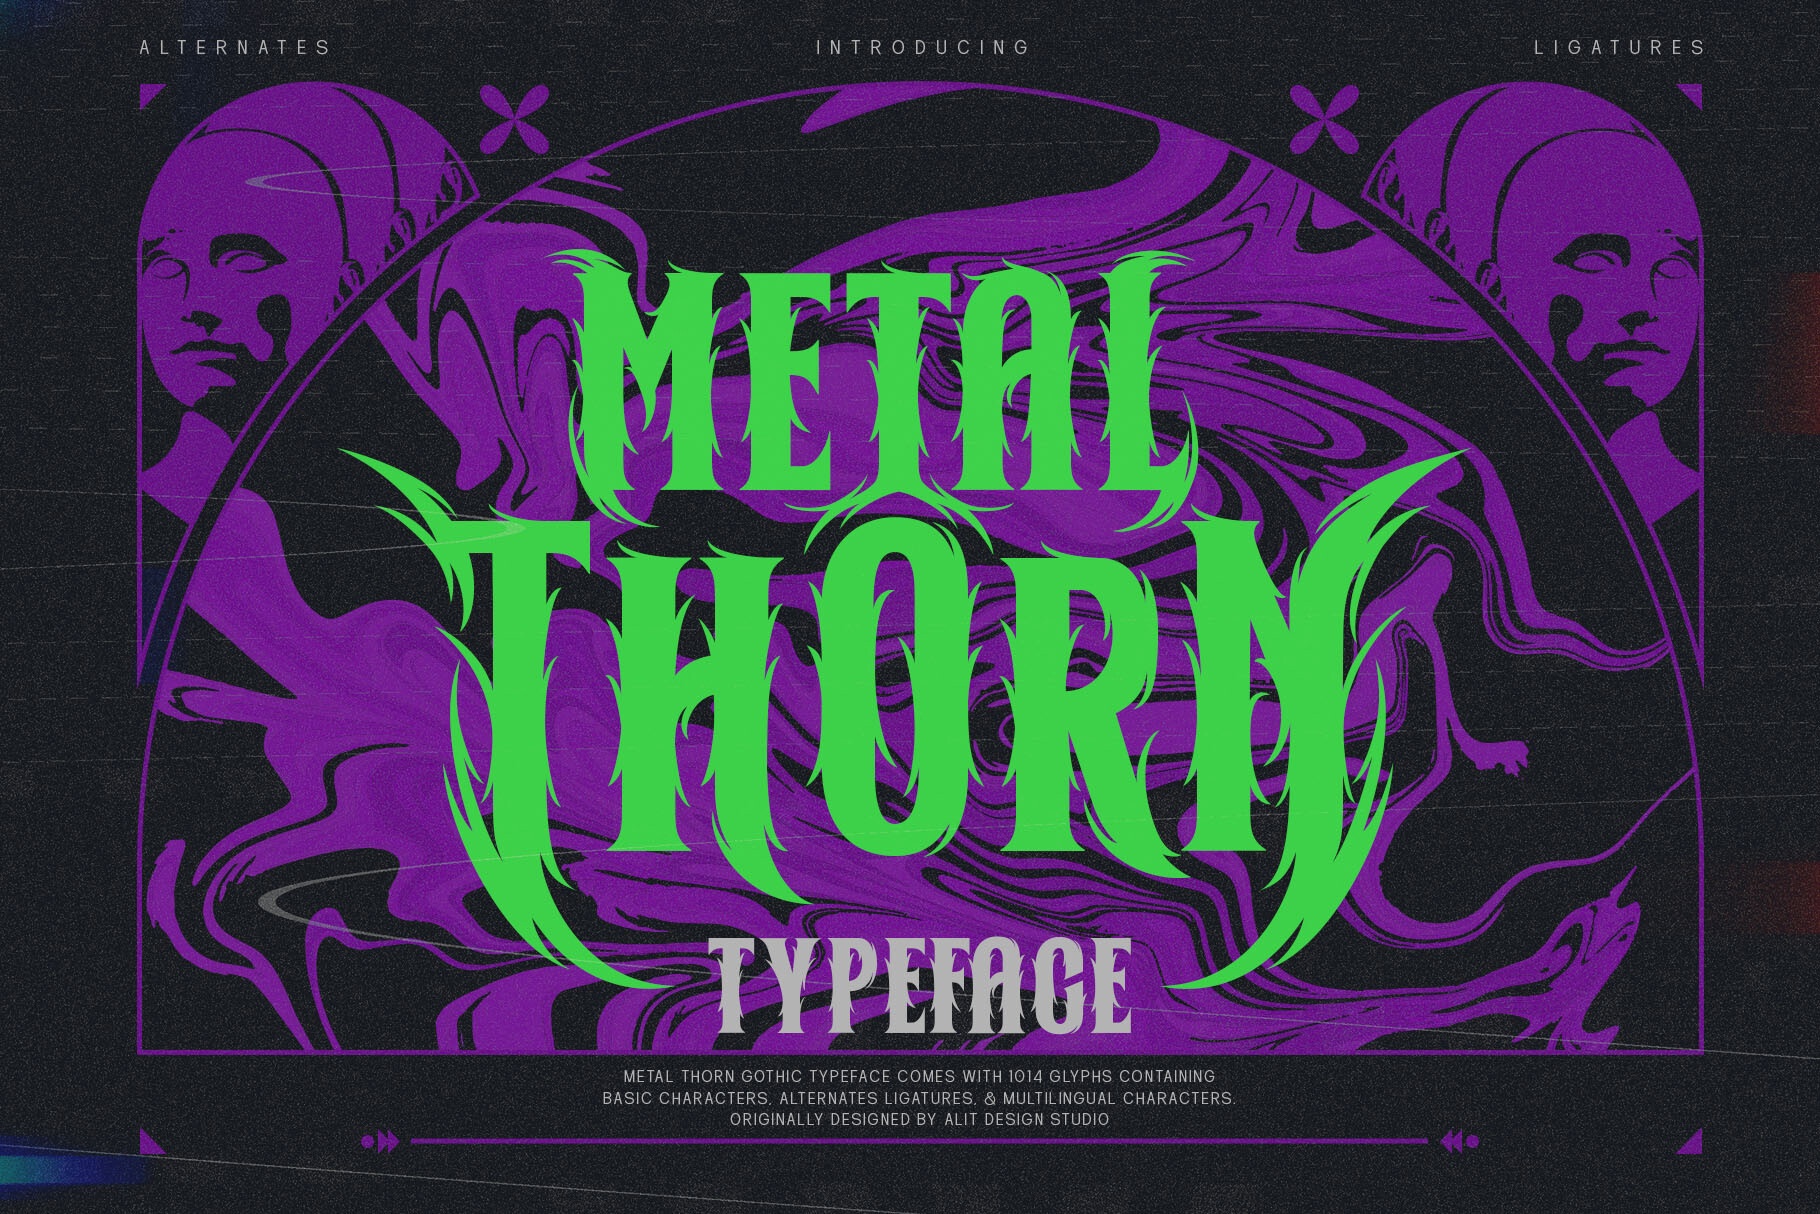 Font Metal Thorn